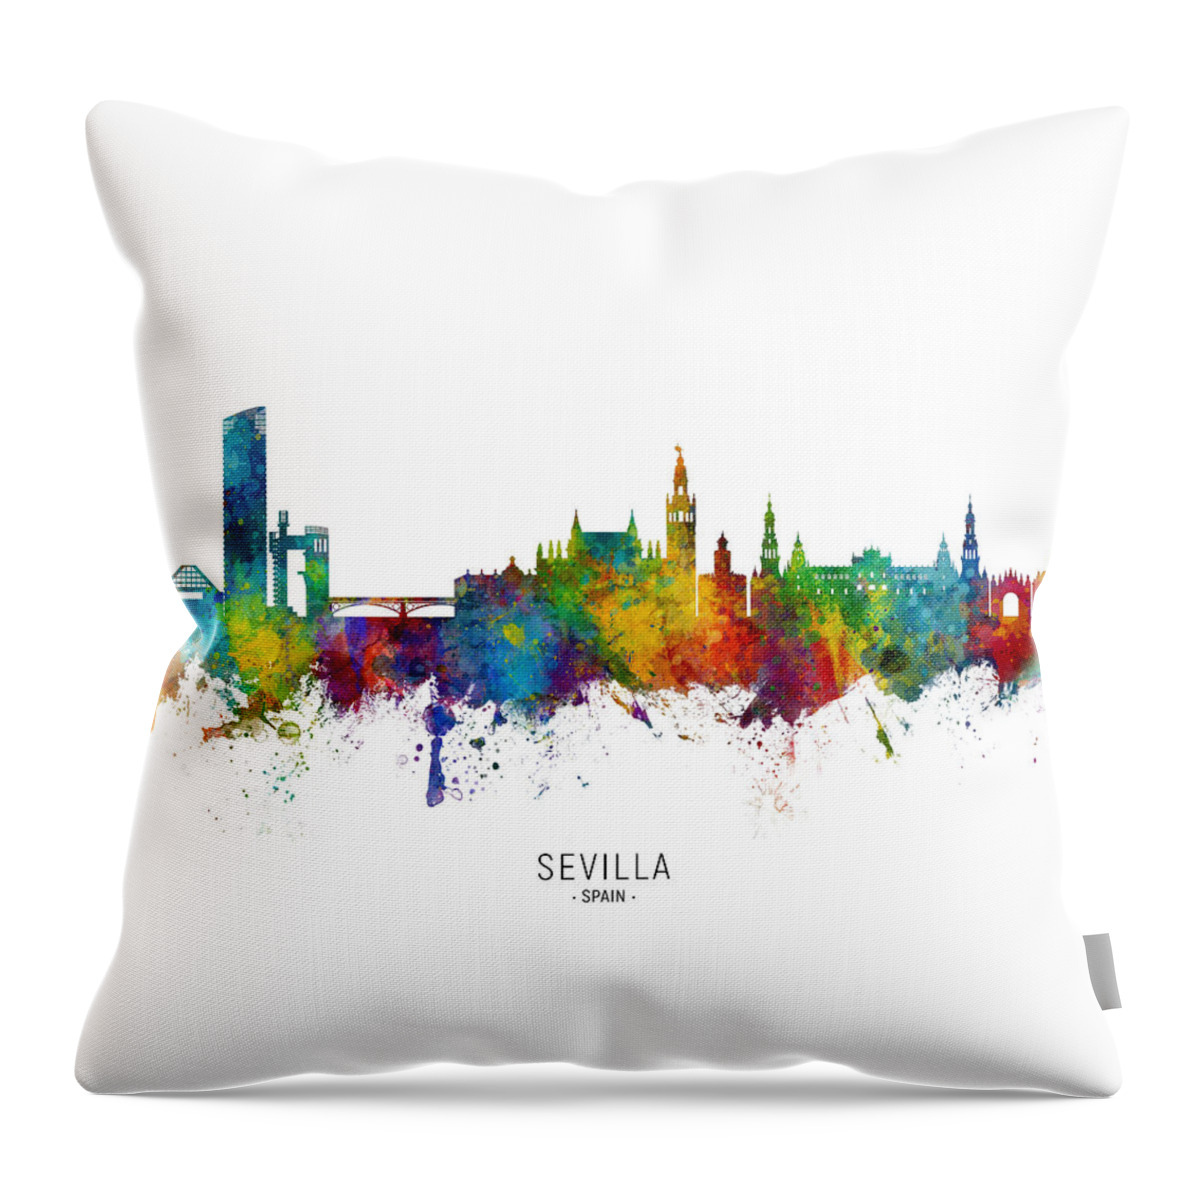 Sevilla Throw Pillow featuring the digital art Sevilla Spain Skyline by Michael Tompsett